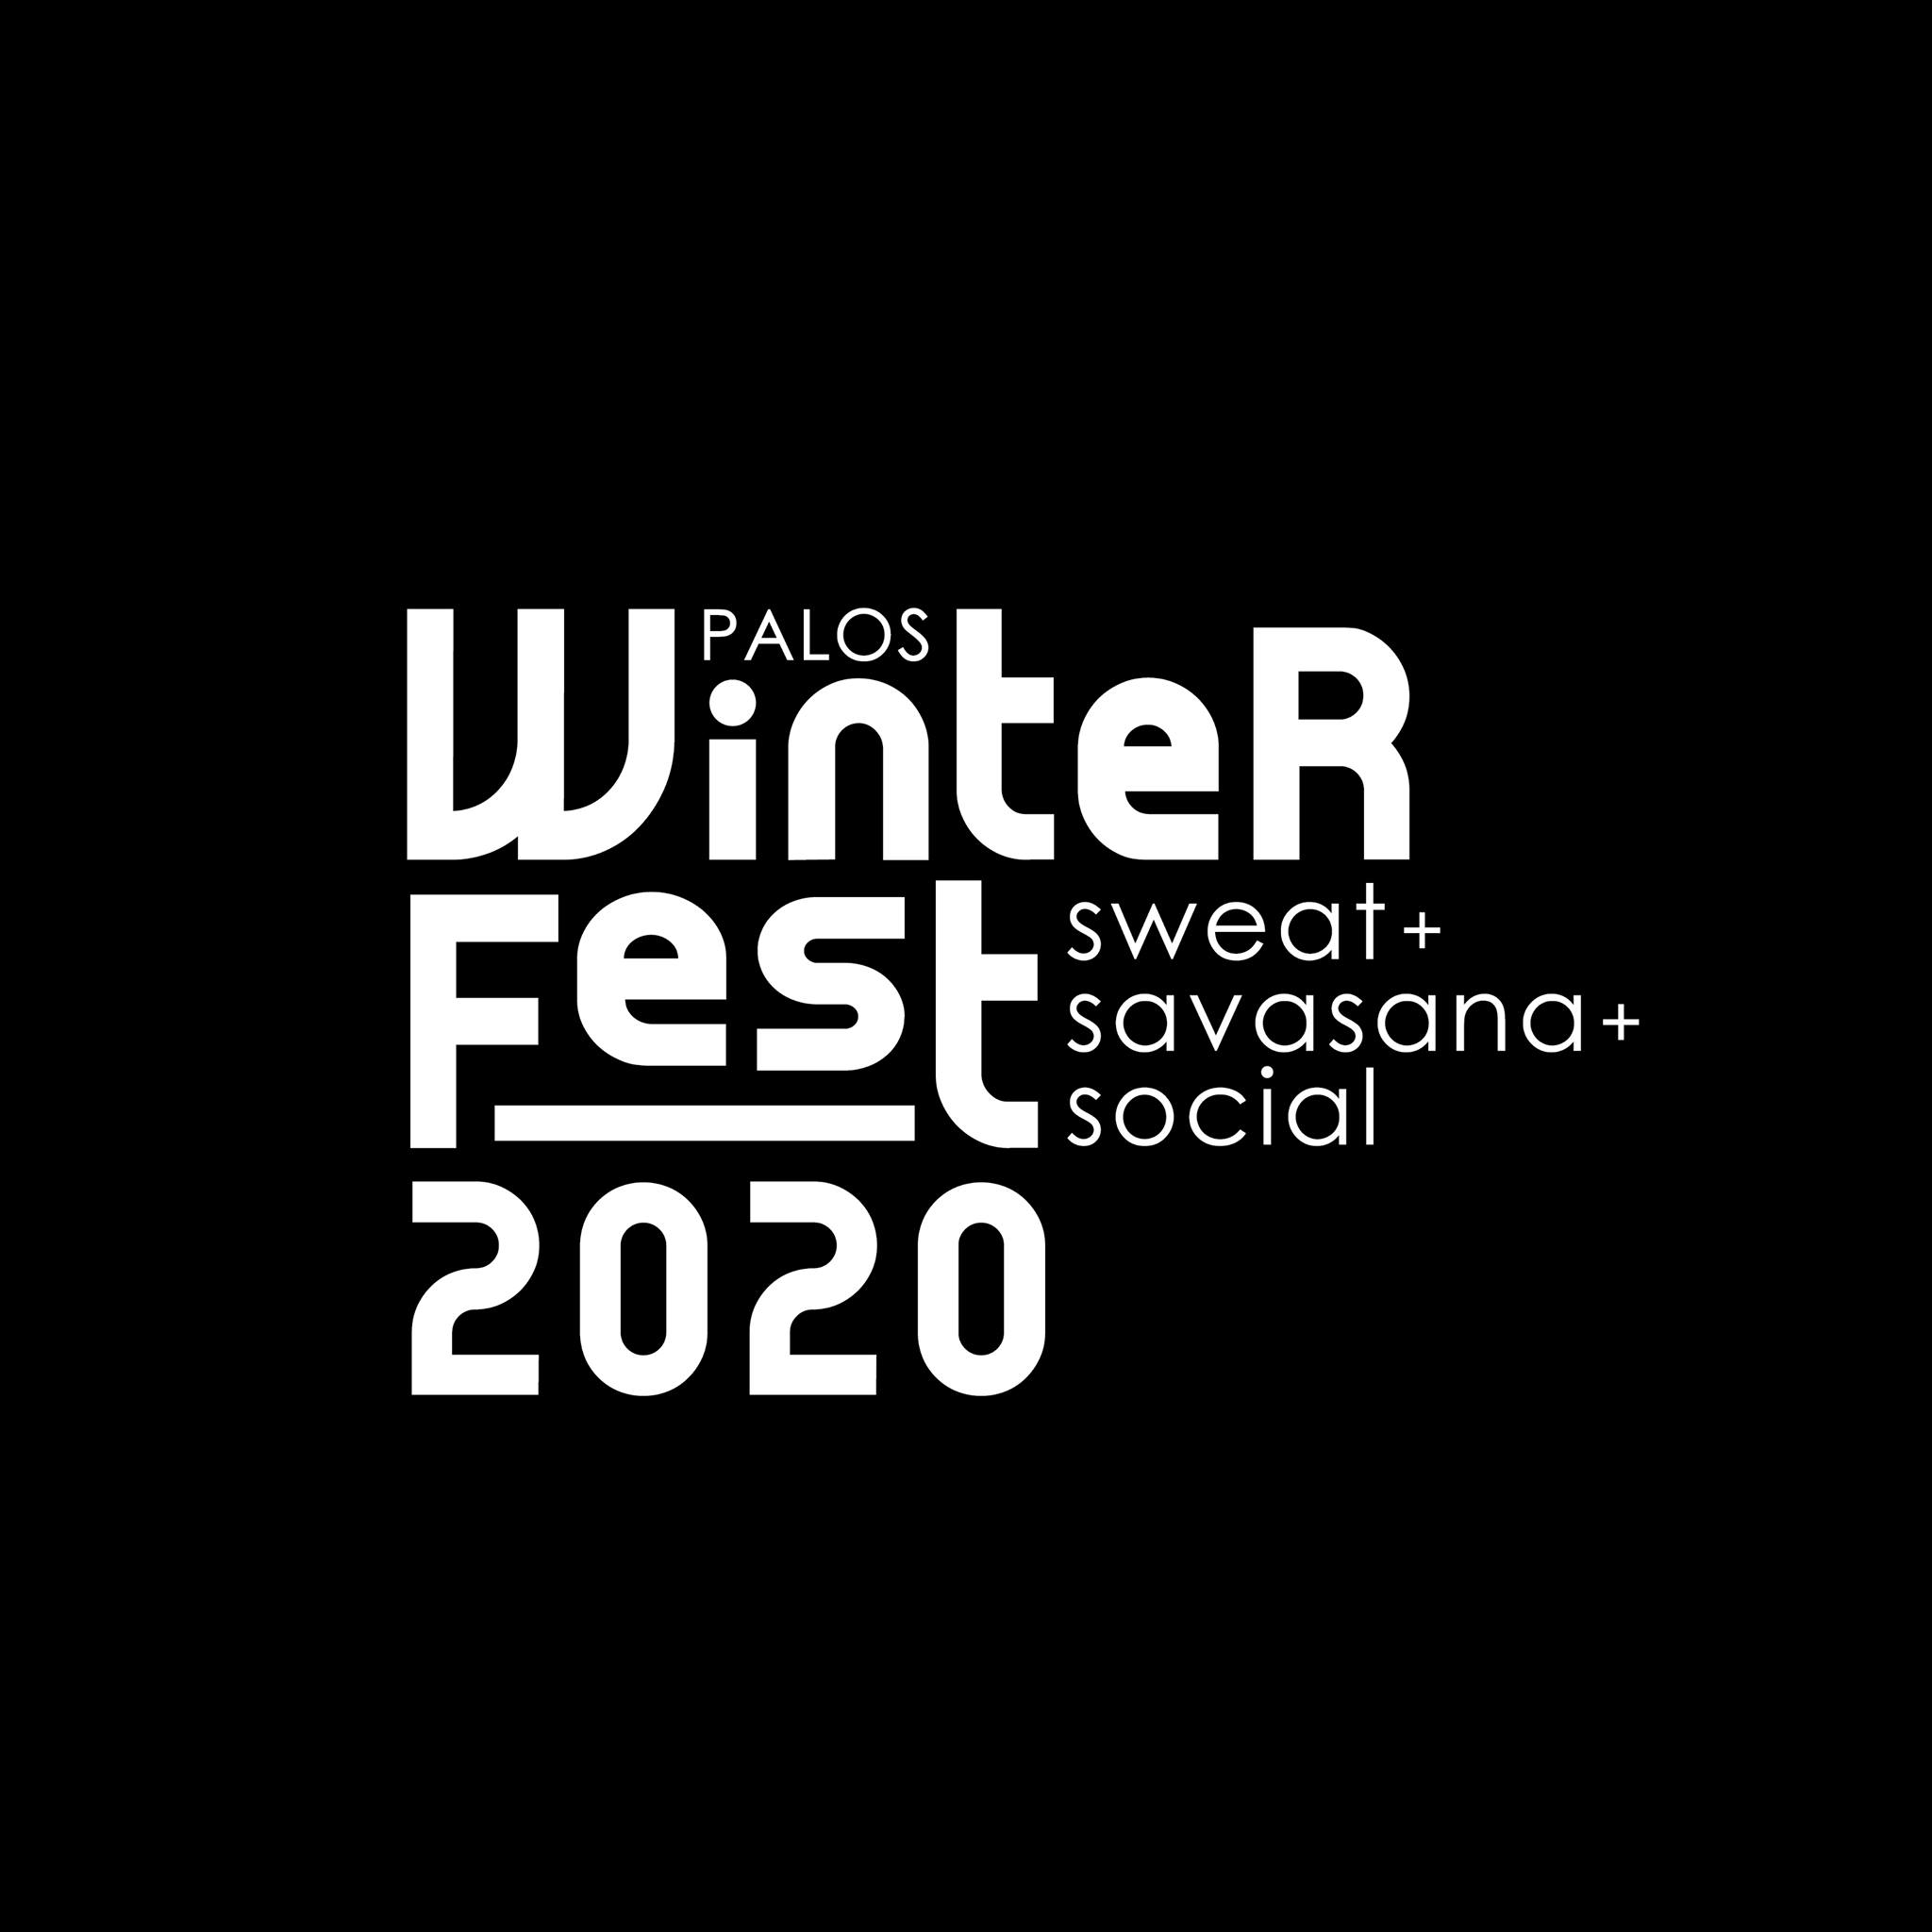 1 Feb 2020 | Palos Heights Winter Fest